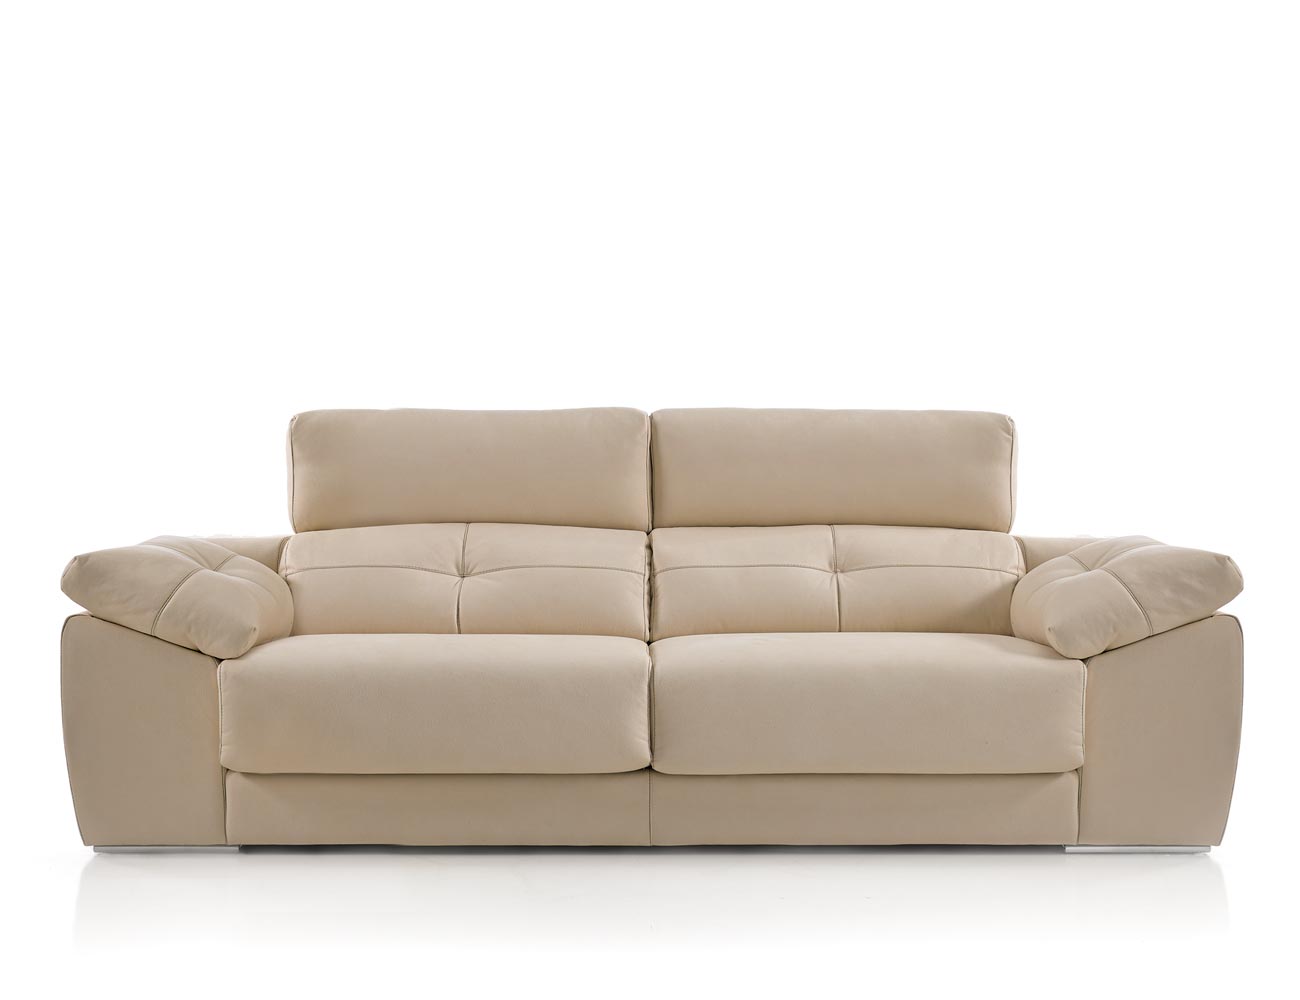 Sofa moderno 3 2 plazas anti manchas gama alta losa arcon